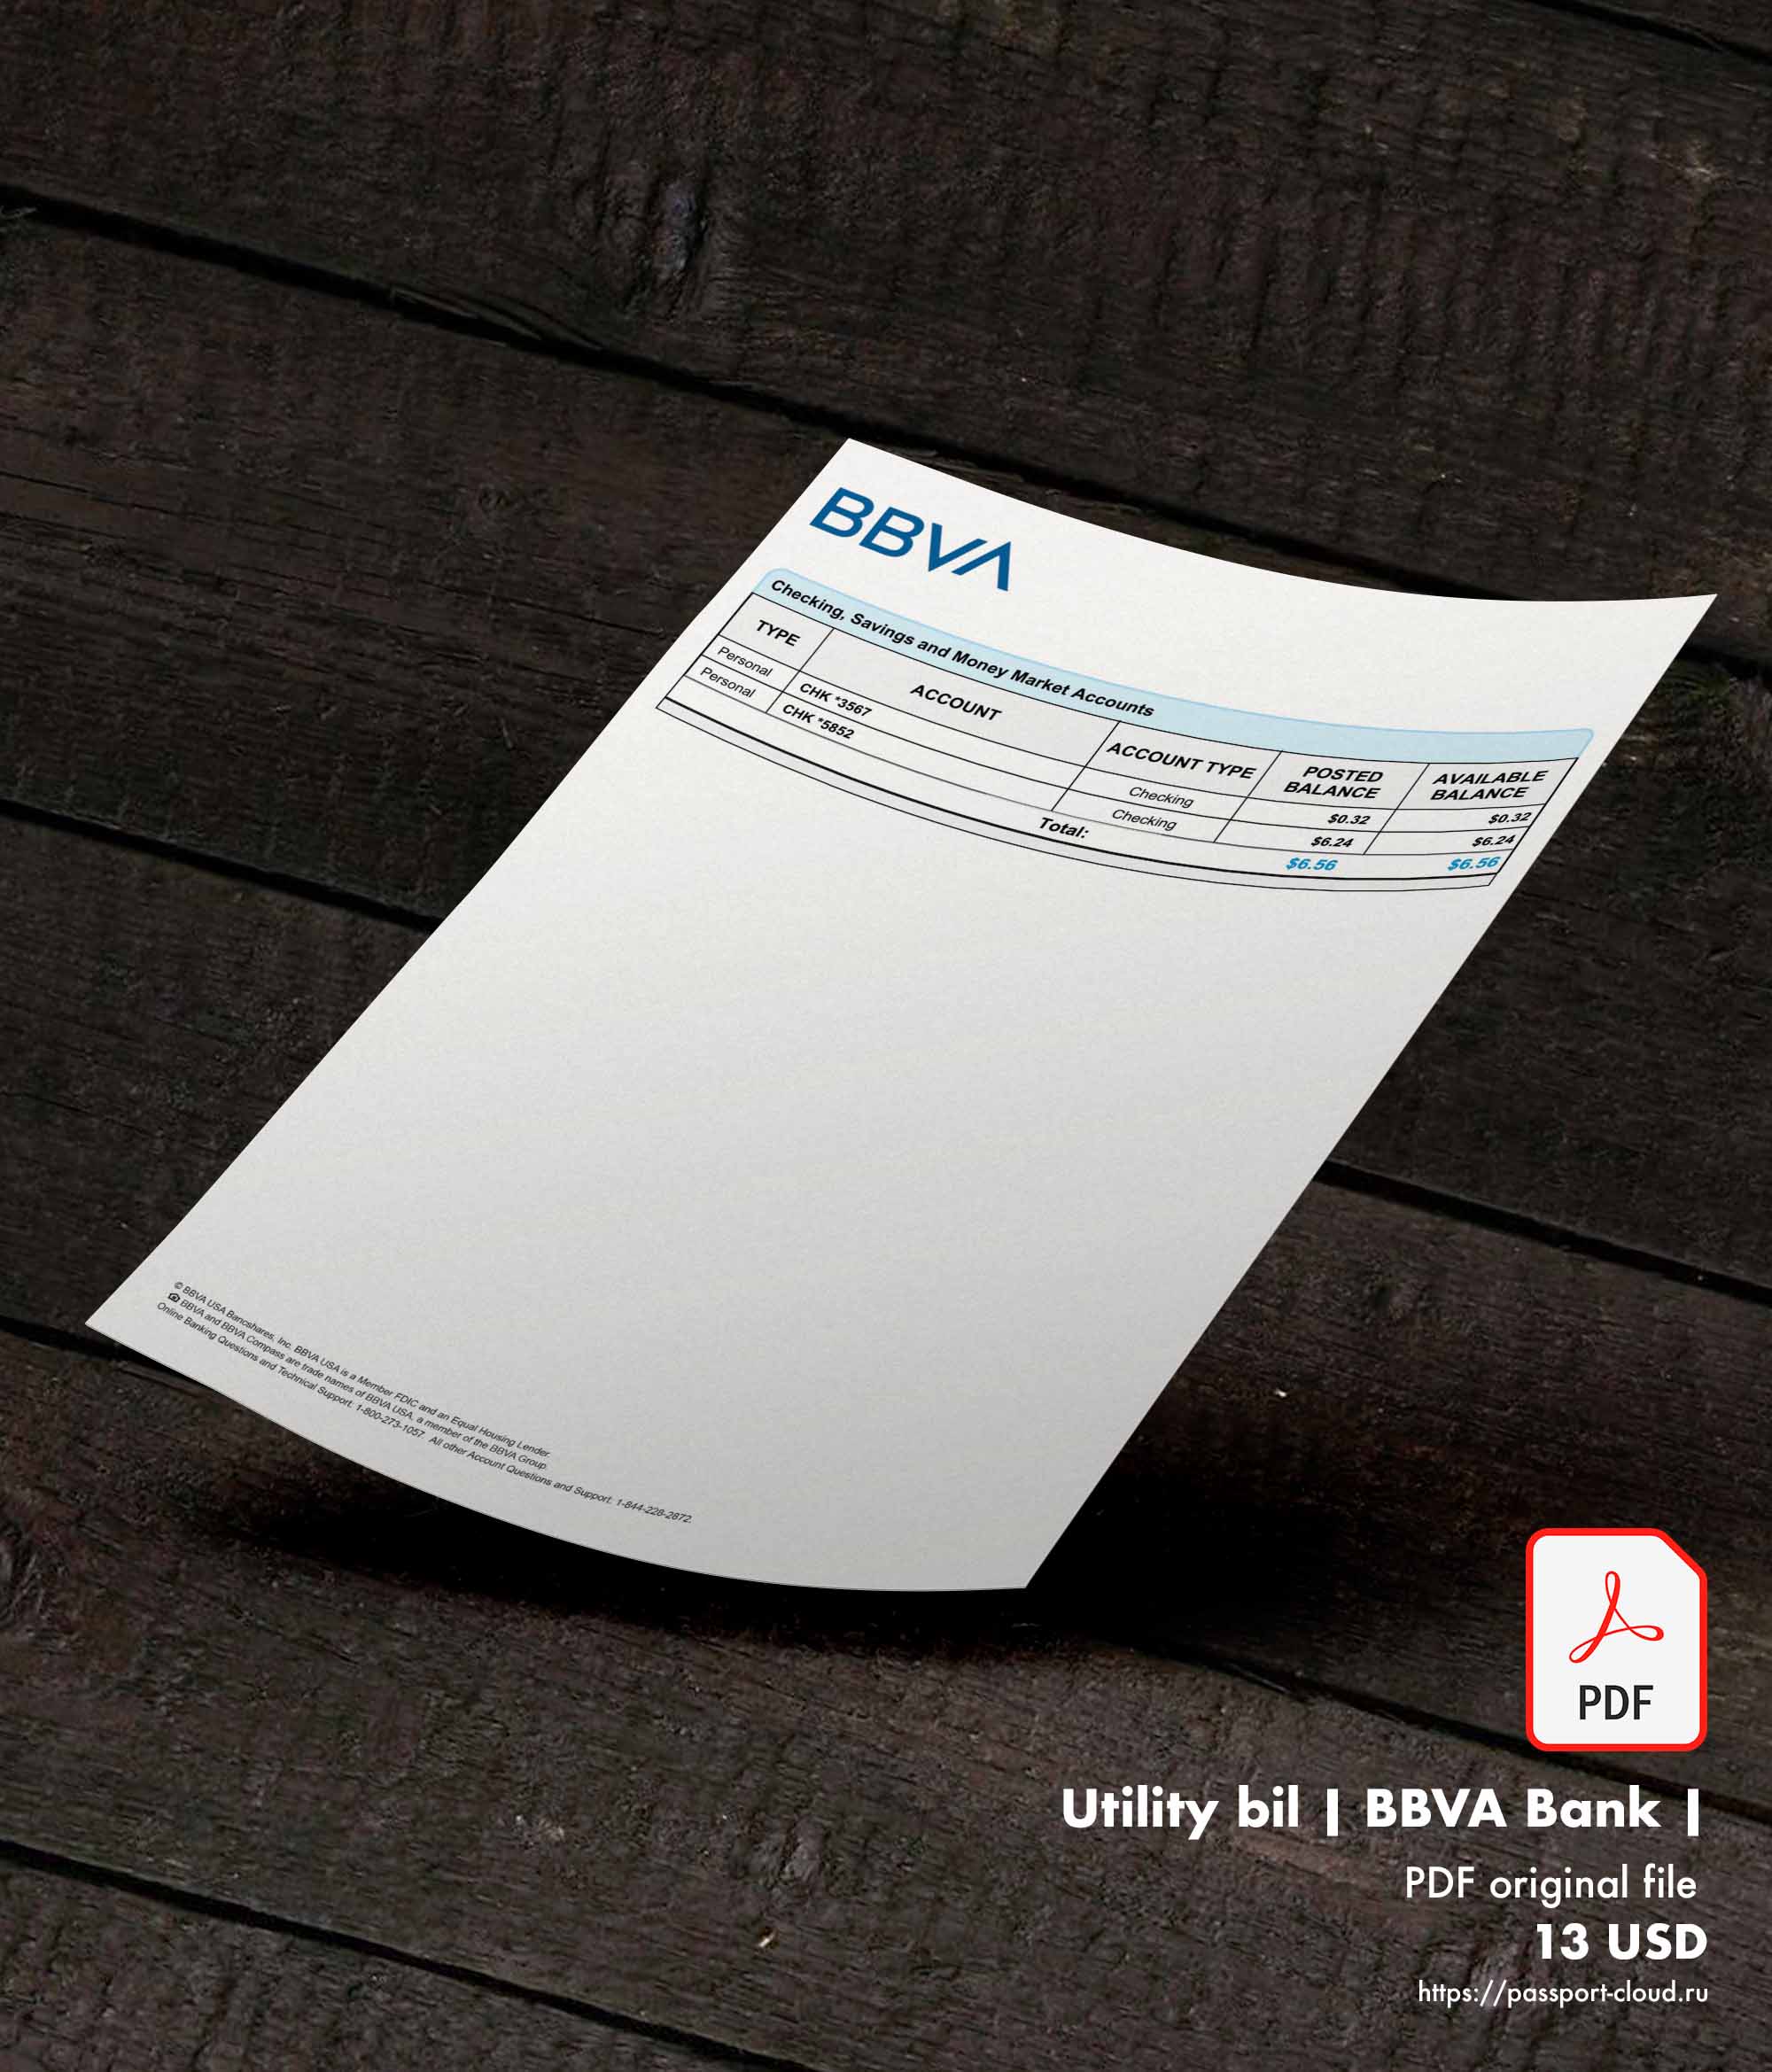  Utility bil | BBVA Bank | Spain |1